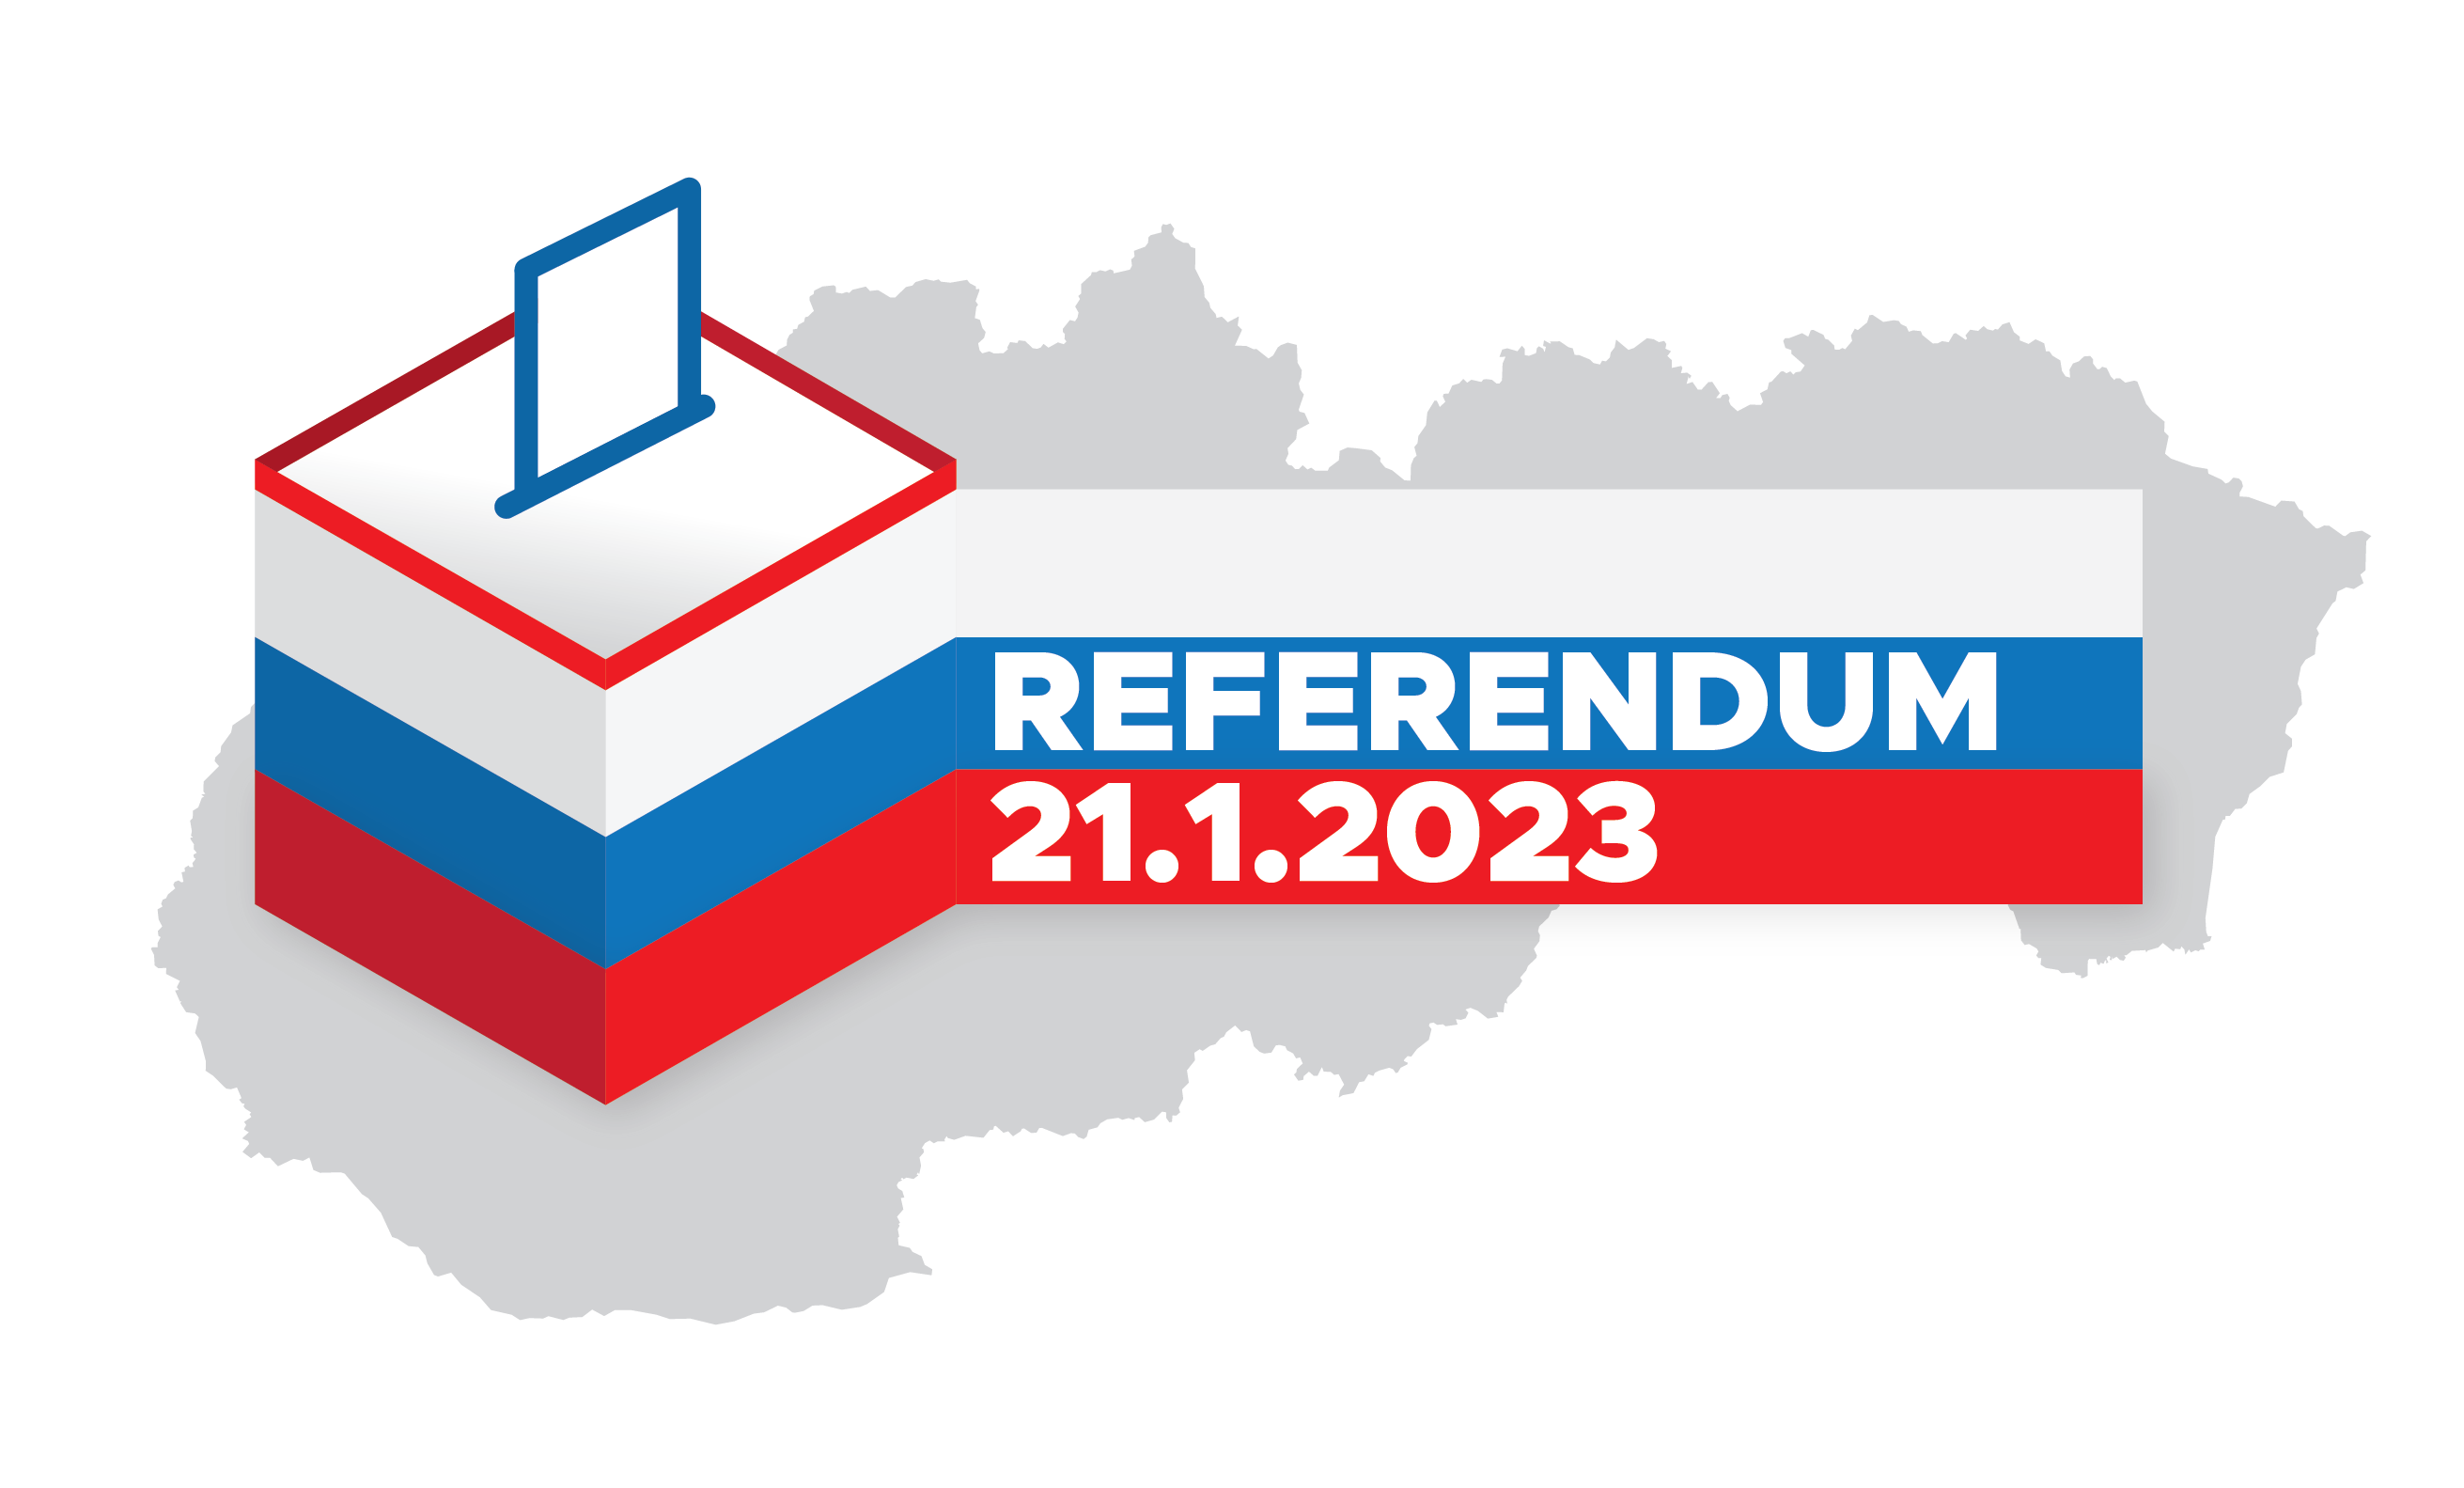 Referendum 2023 06